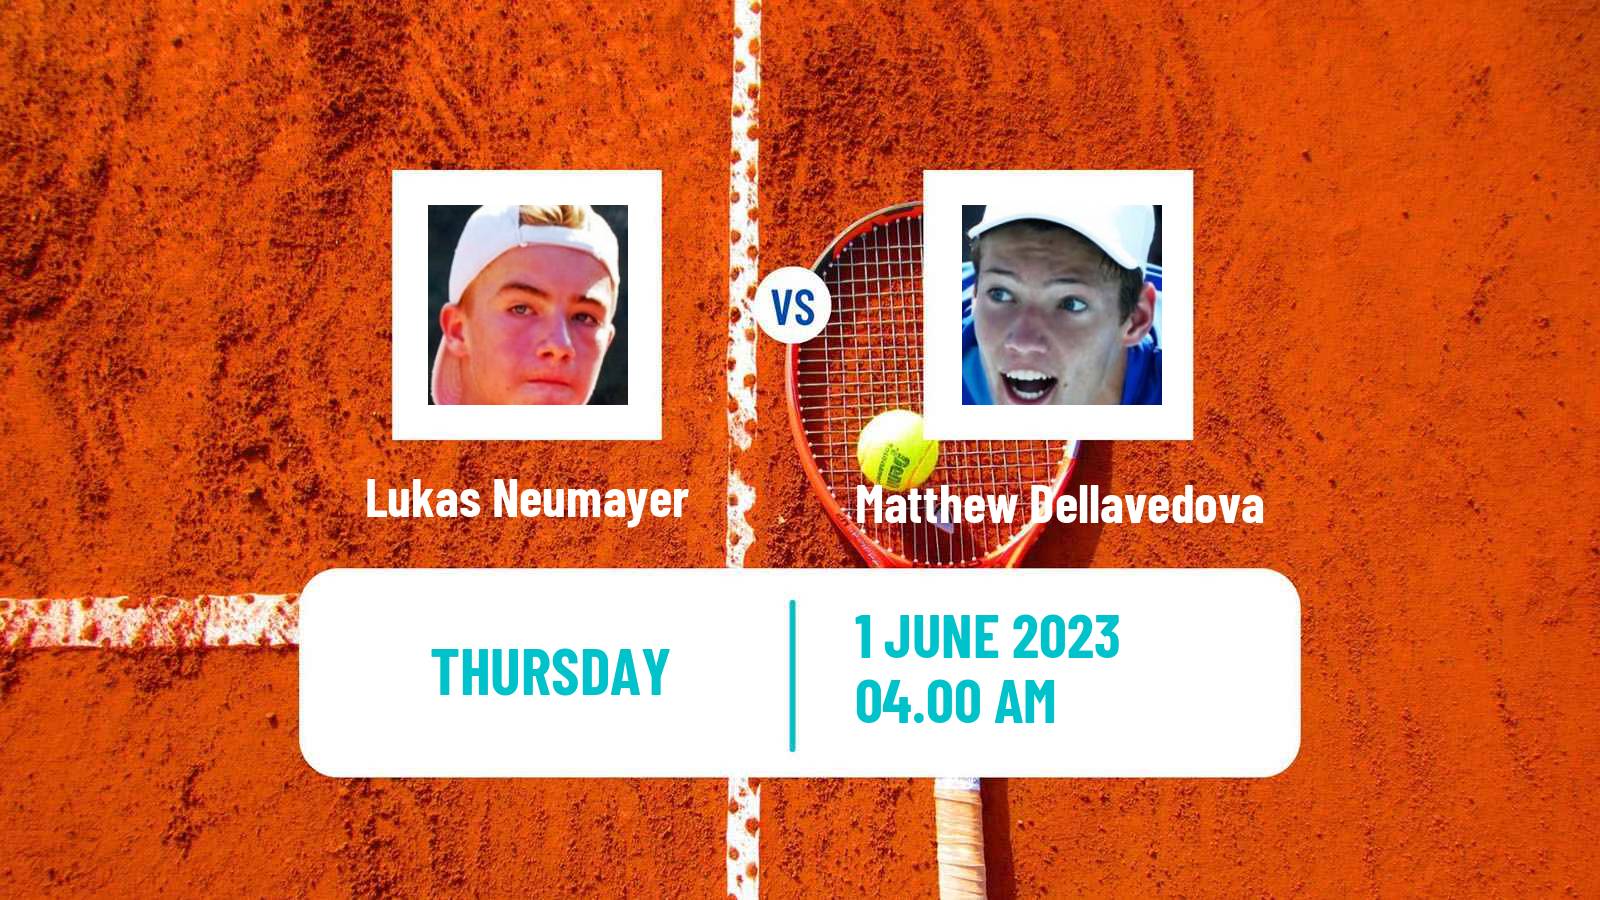 Tennis ITF M25 Jablonec Nad Nisou Men Lukas Neumayer - Matthew Dellavedova